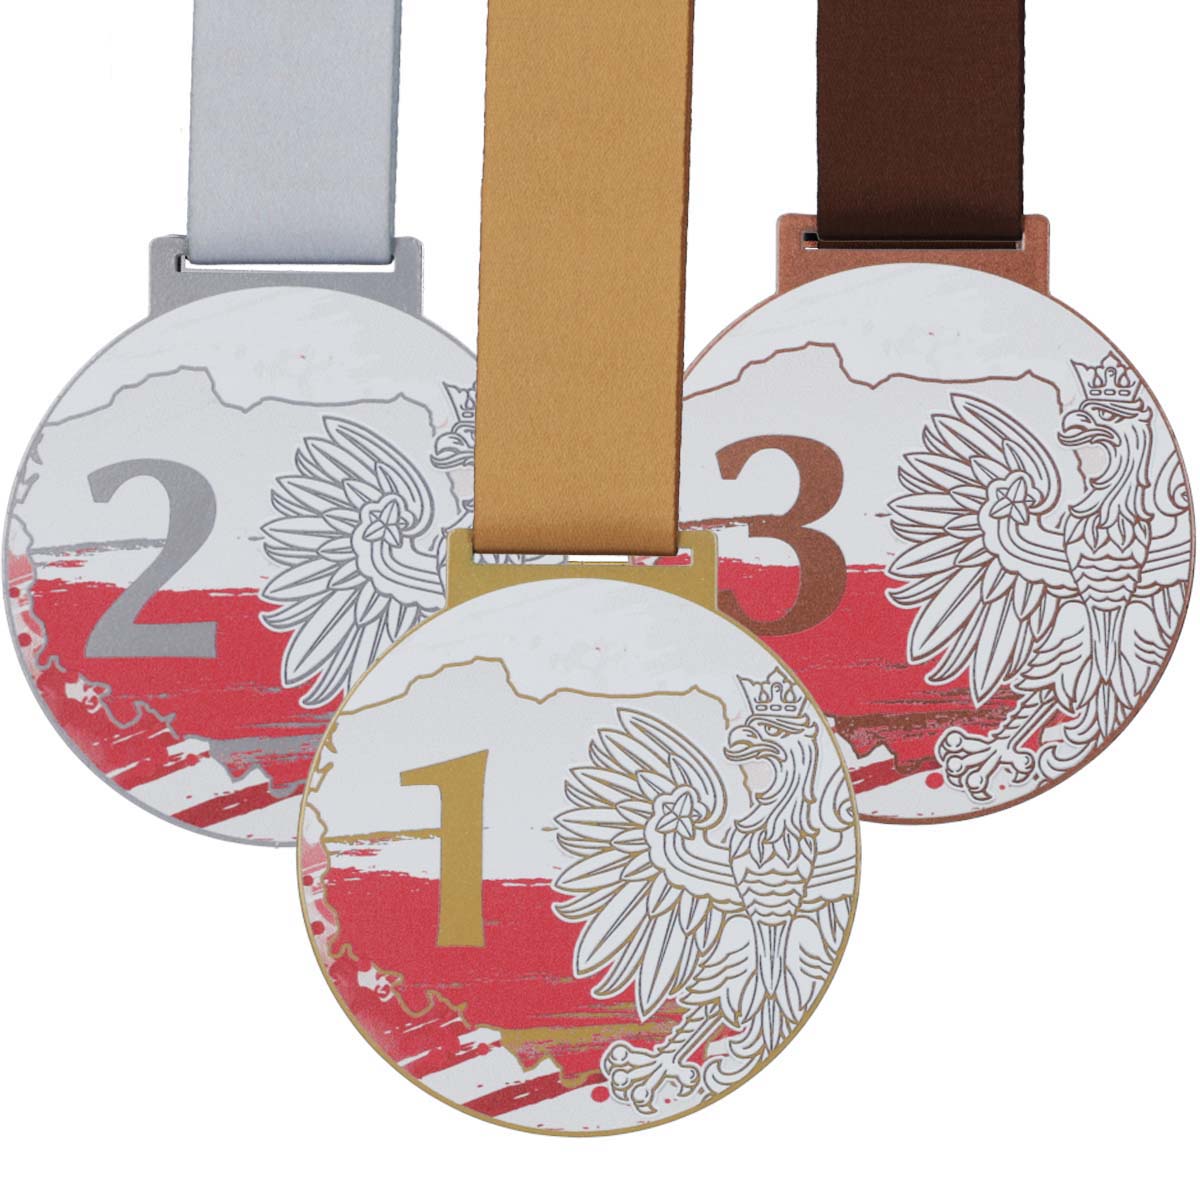 medale patriotyczne polskie z miejscem 1 2 3